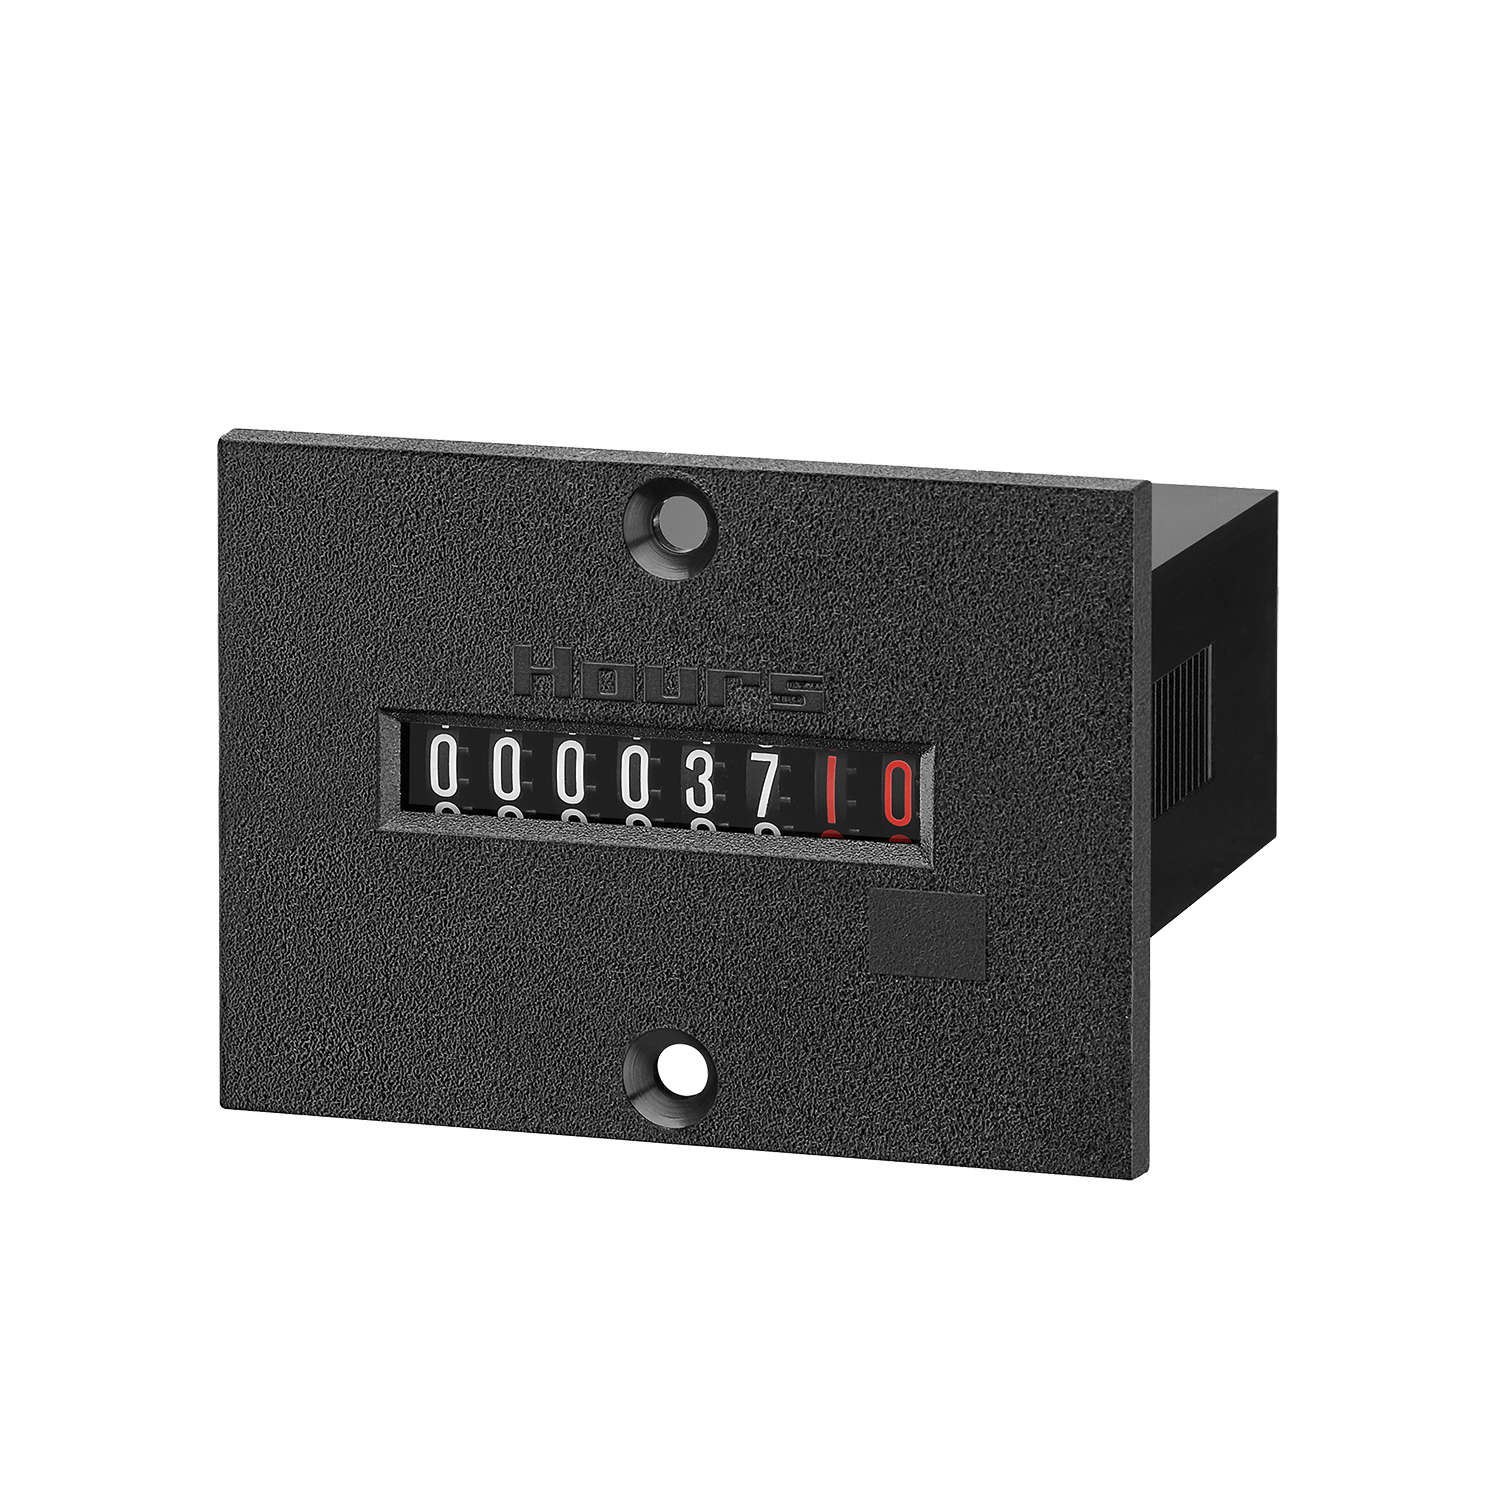 H37 Betriebsstundenzähler elektromechanisch Produkt Details